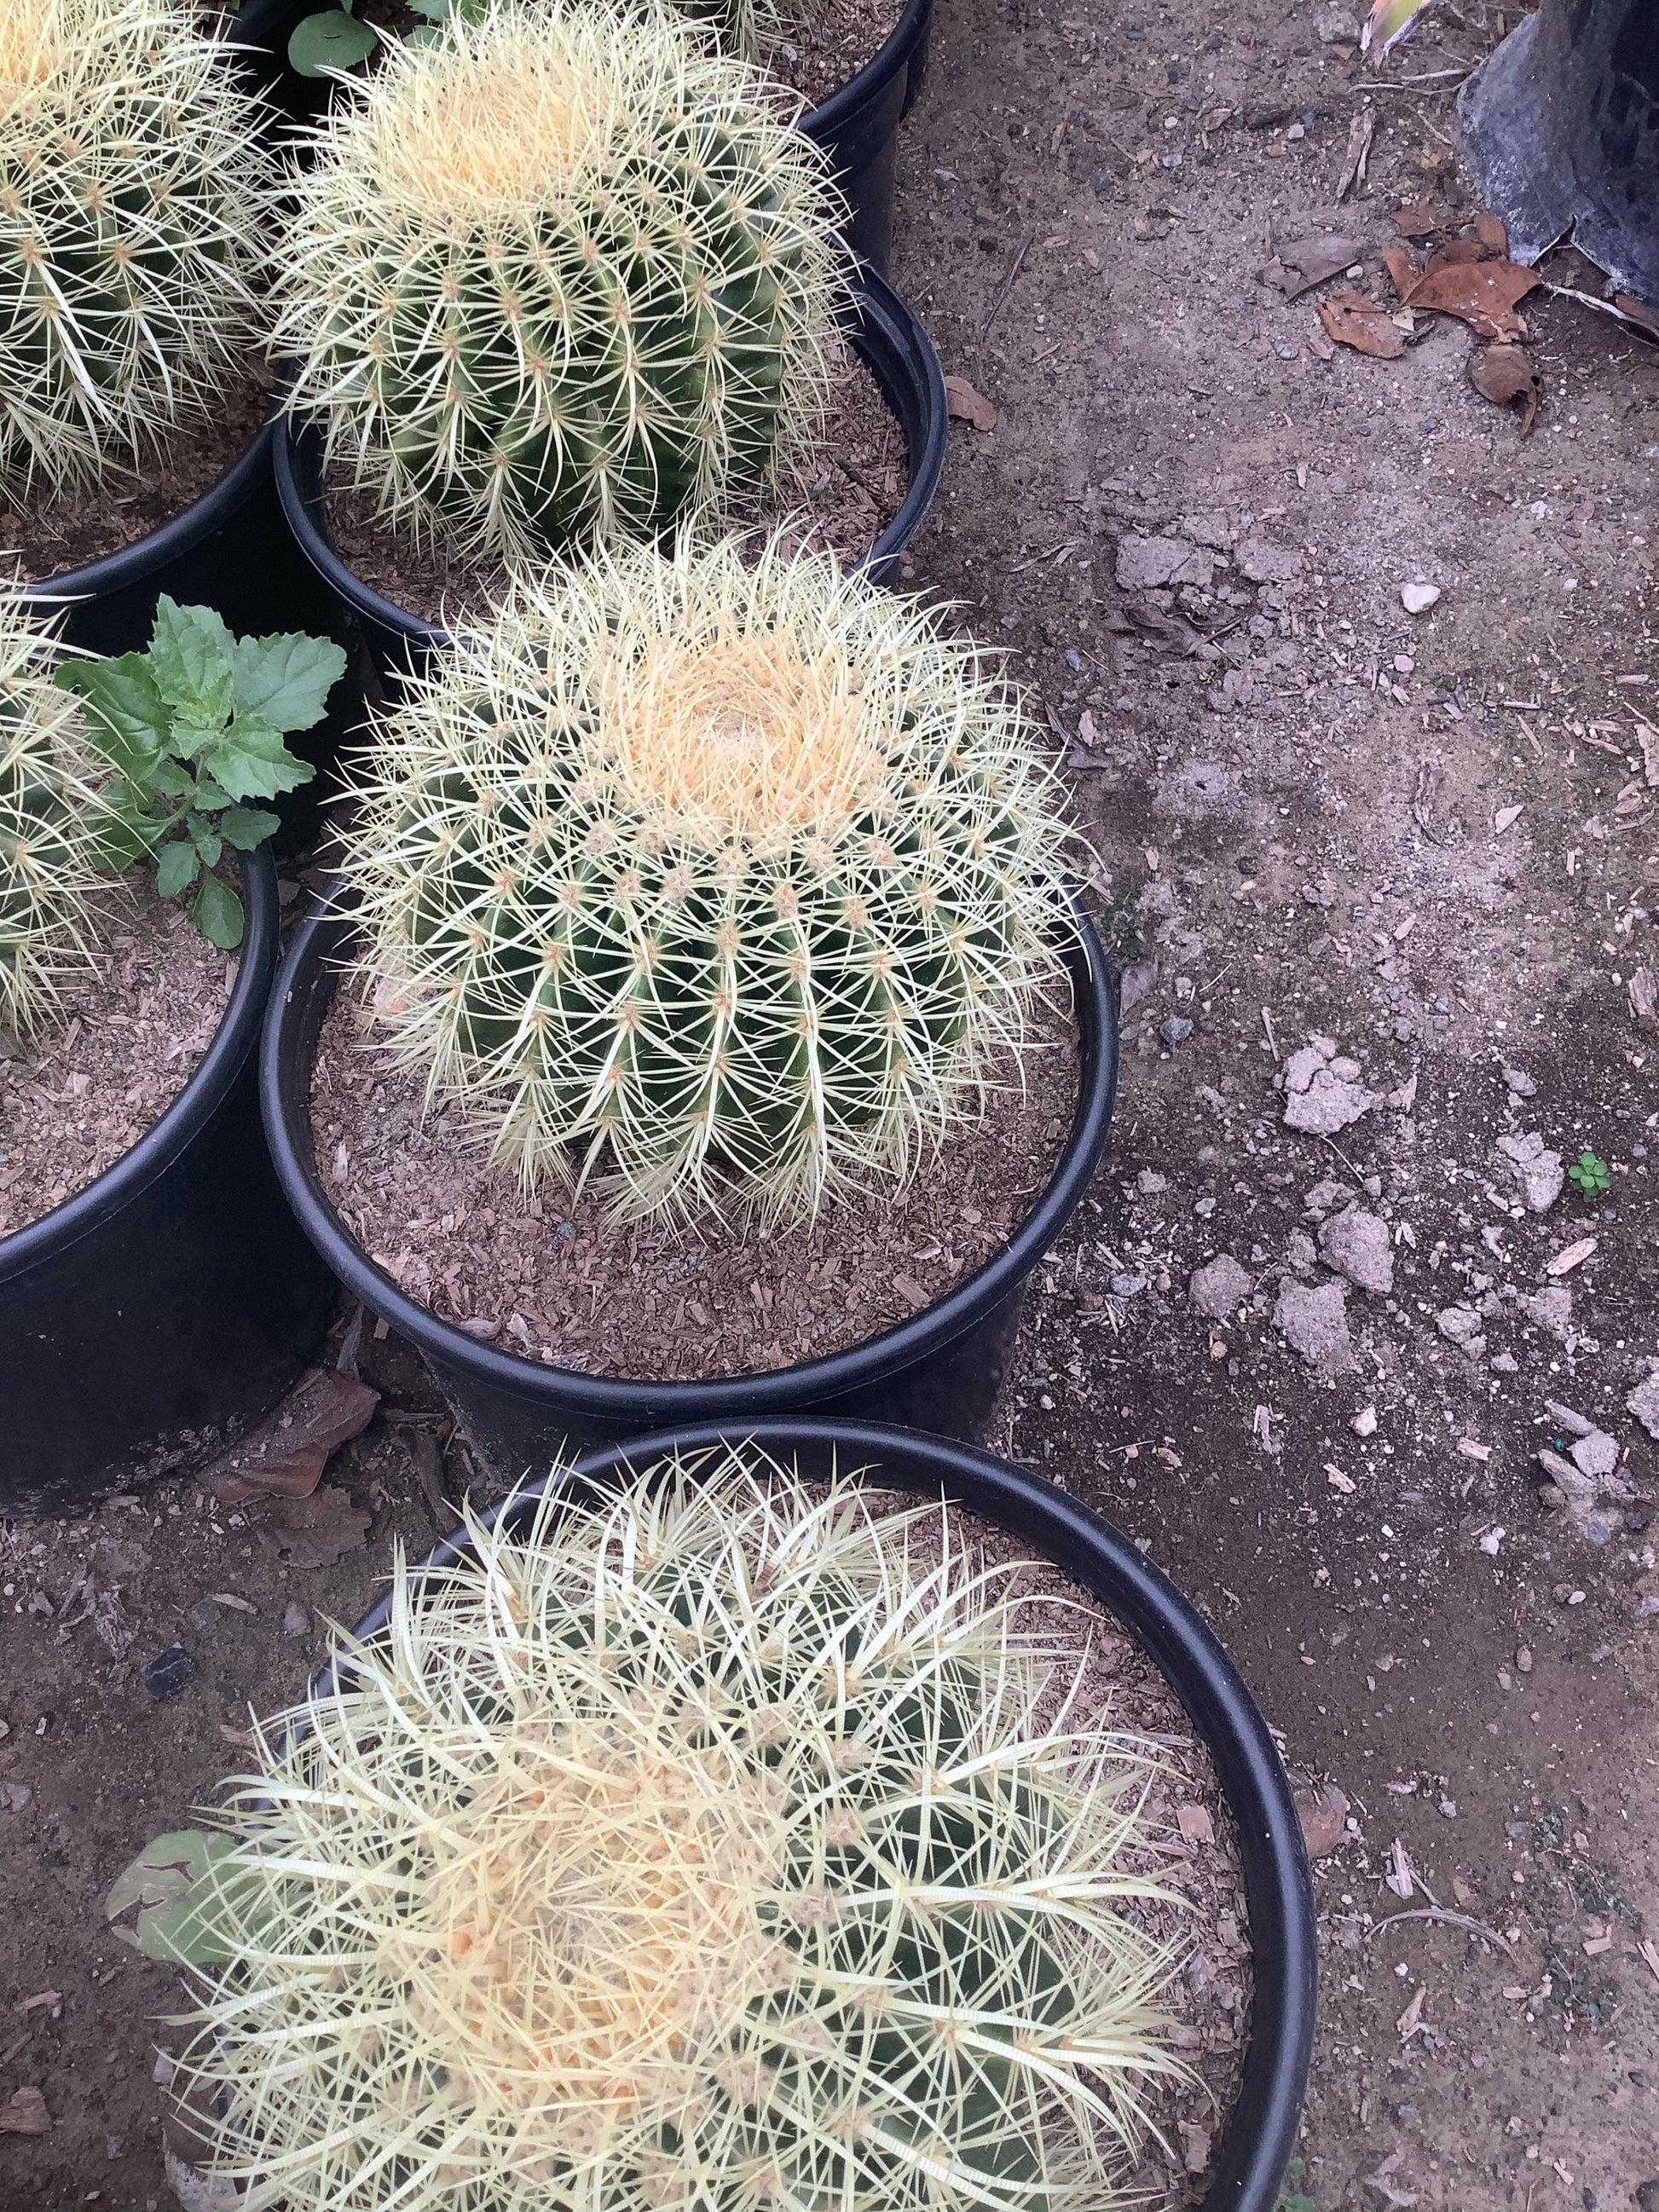 Golden Barrel Cactus Echinocactus Grusonii One Gallon Size